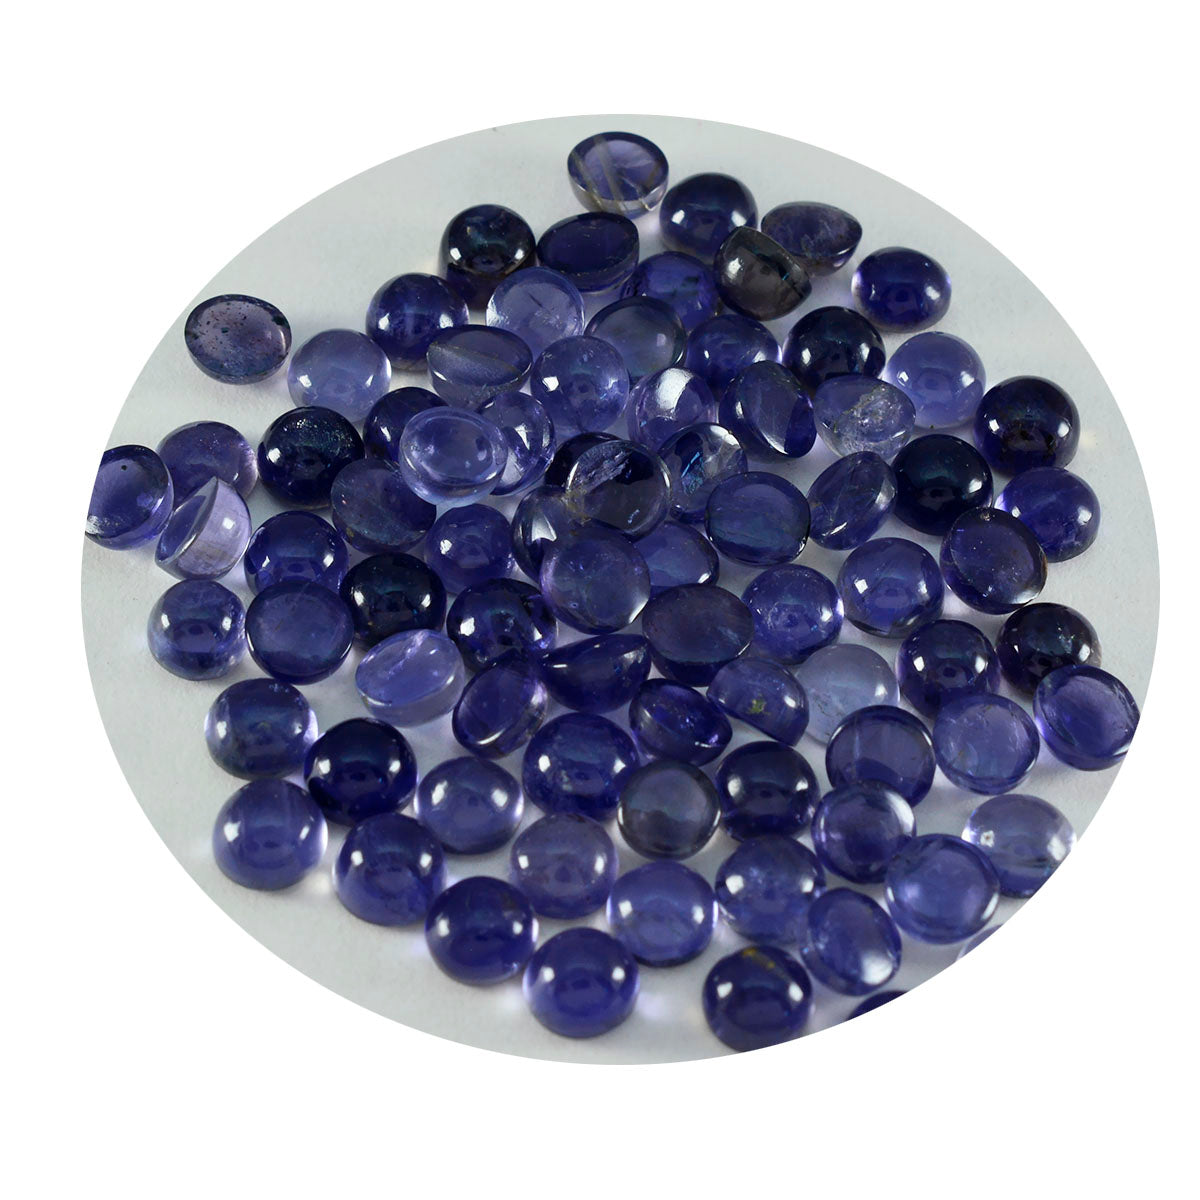 Riyogems 1 cabochon iolite bleu 4x4 mm forme ronde a pierres précieuses de qualité